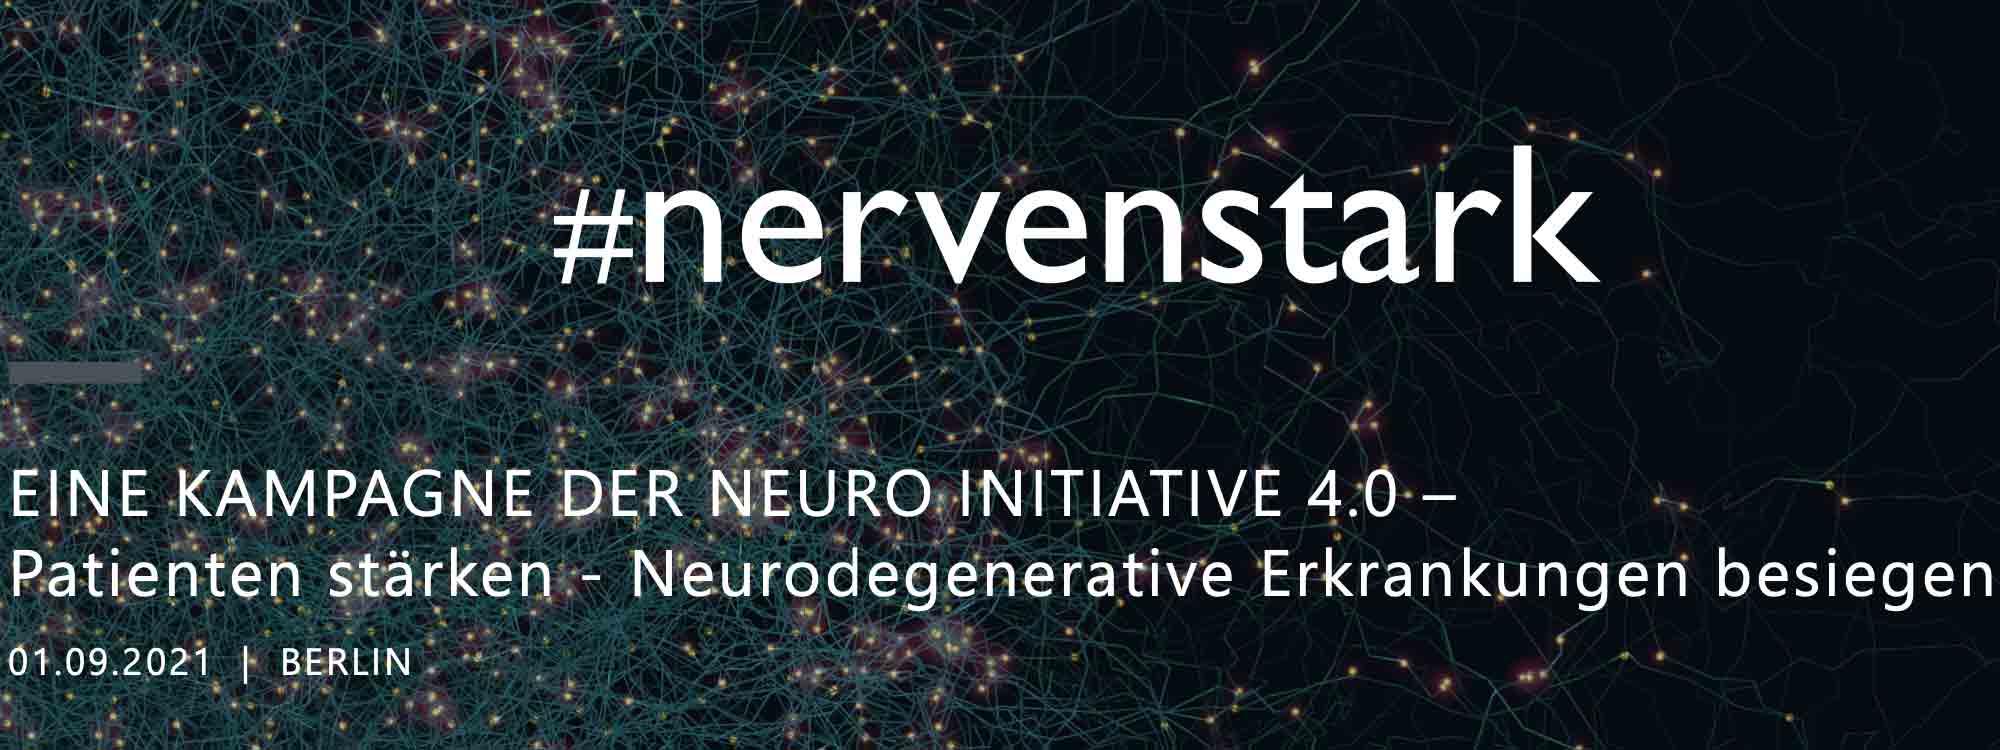 nervenstark - Gemeinsam gegen Neurodegeneration